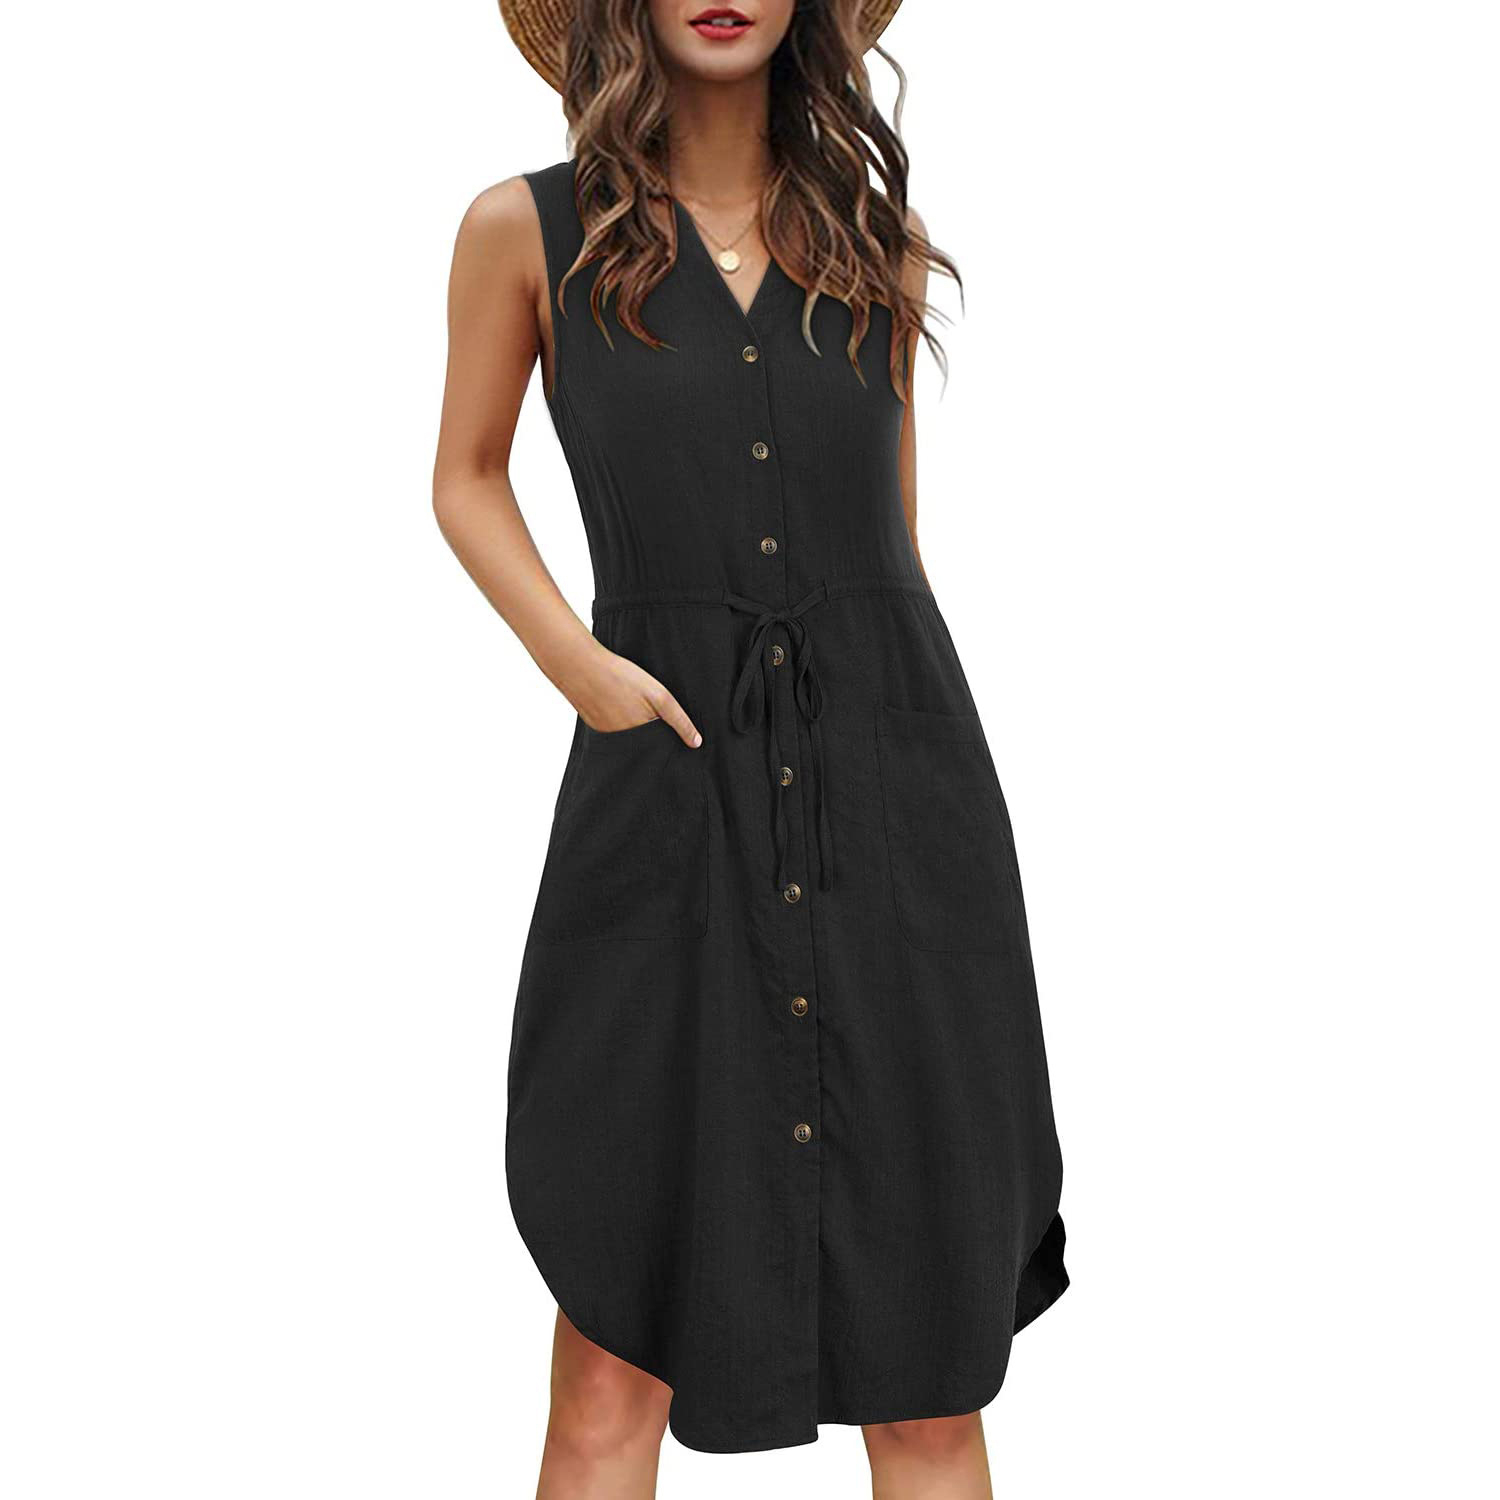 New Sling Button Pocket Dress - Black, L